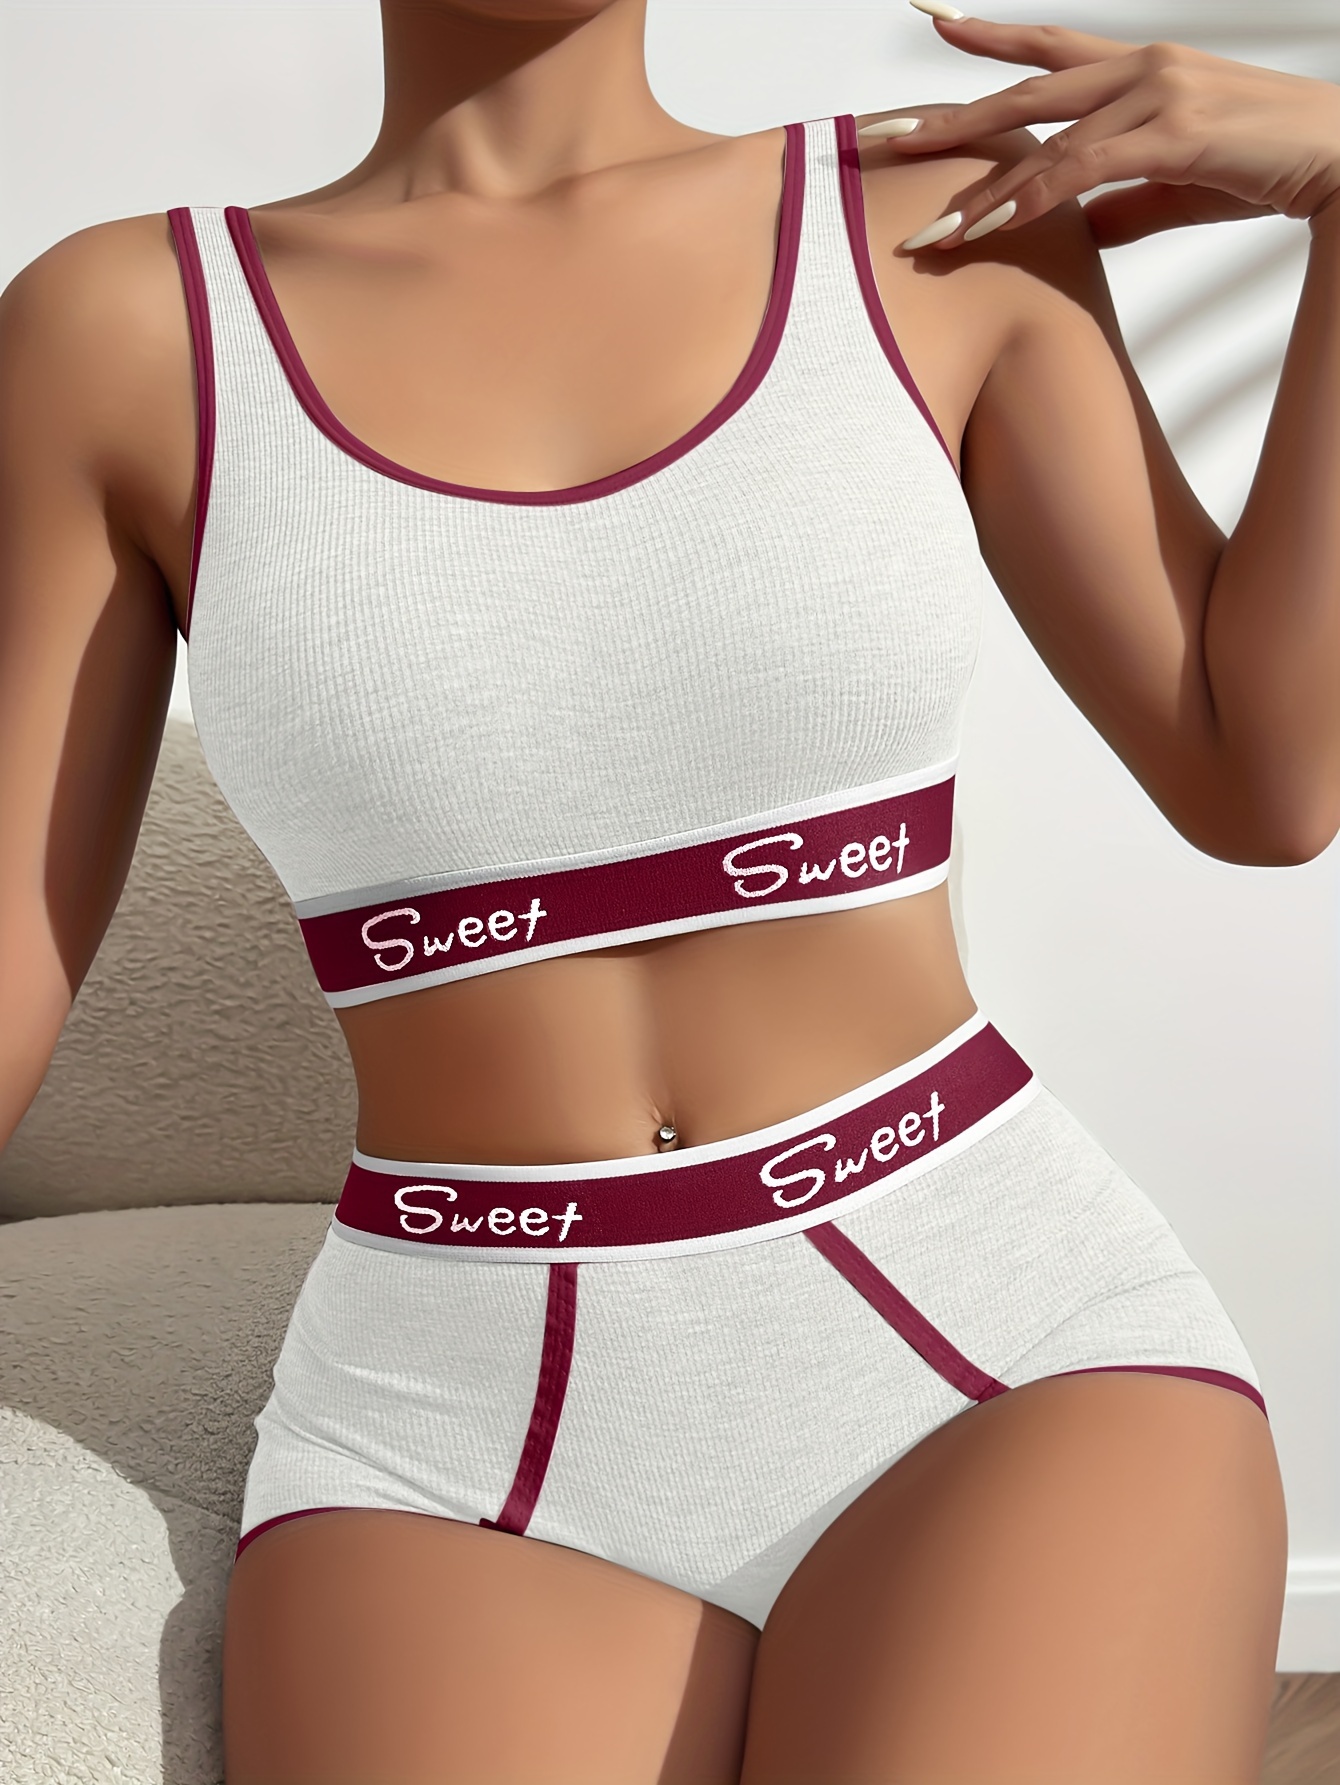 Letter Print Bra & Panties, Push Up Sports Bra & Elastic Panties Lingerie  Set, Women's Lingerie & Underwear